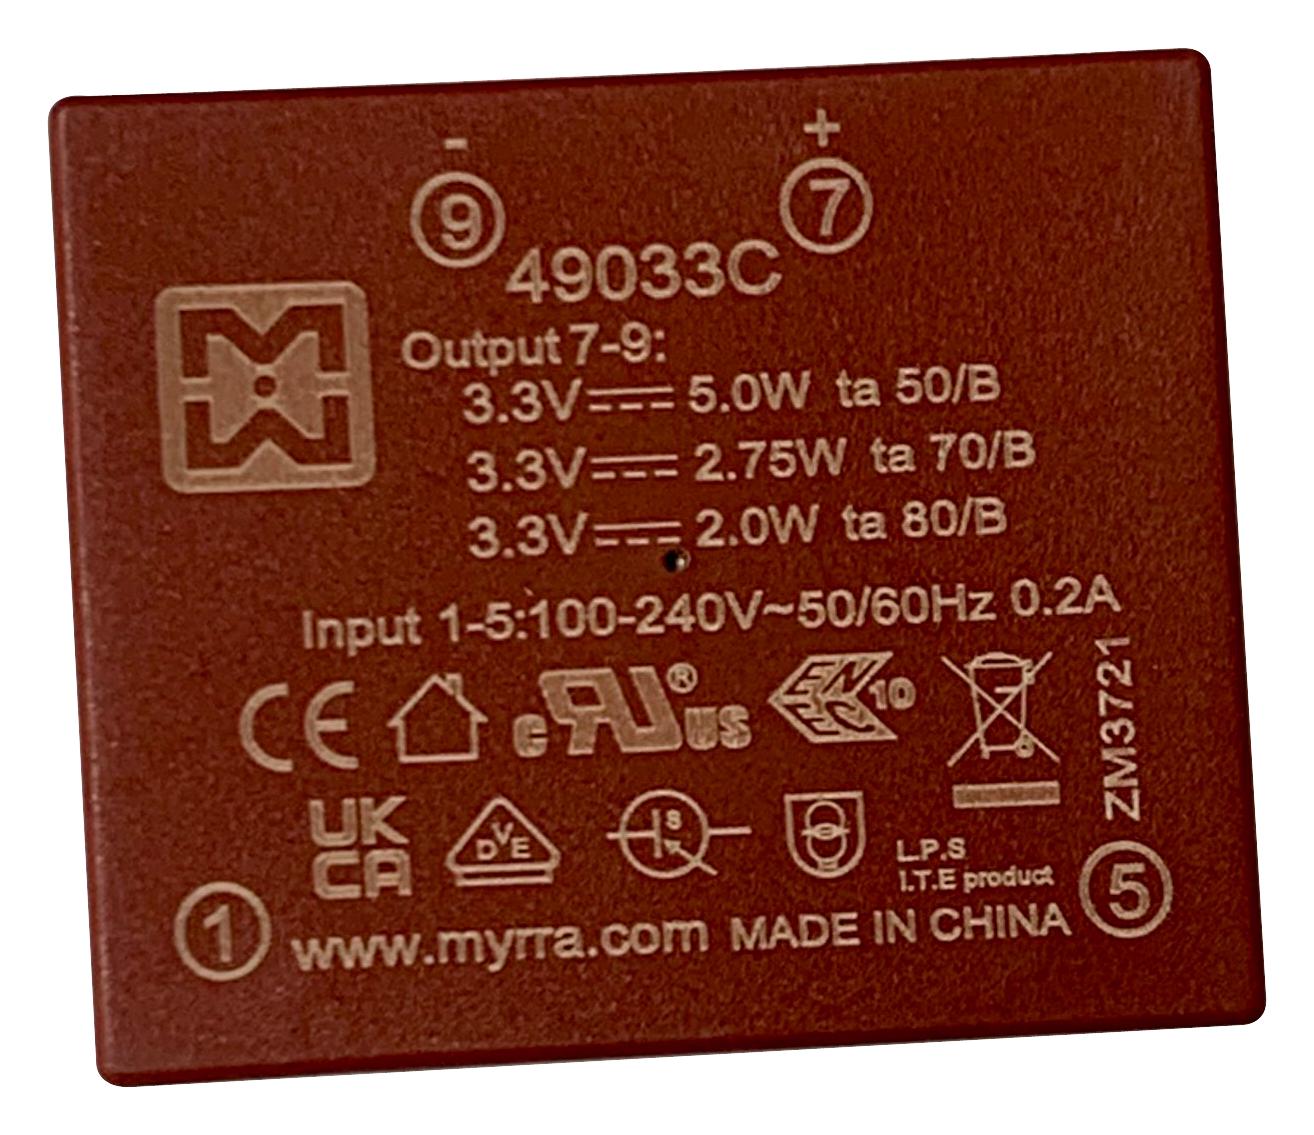 Myrra 49033C Power Supply, Ac-Dc, 3.3V, 1.5A